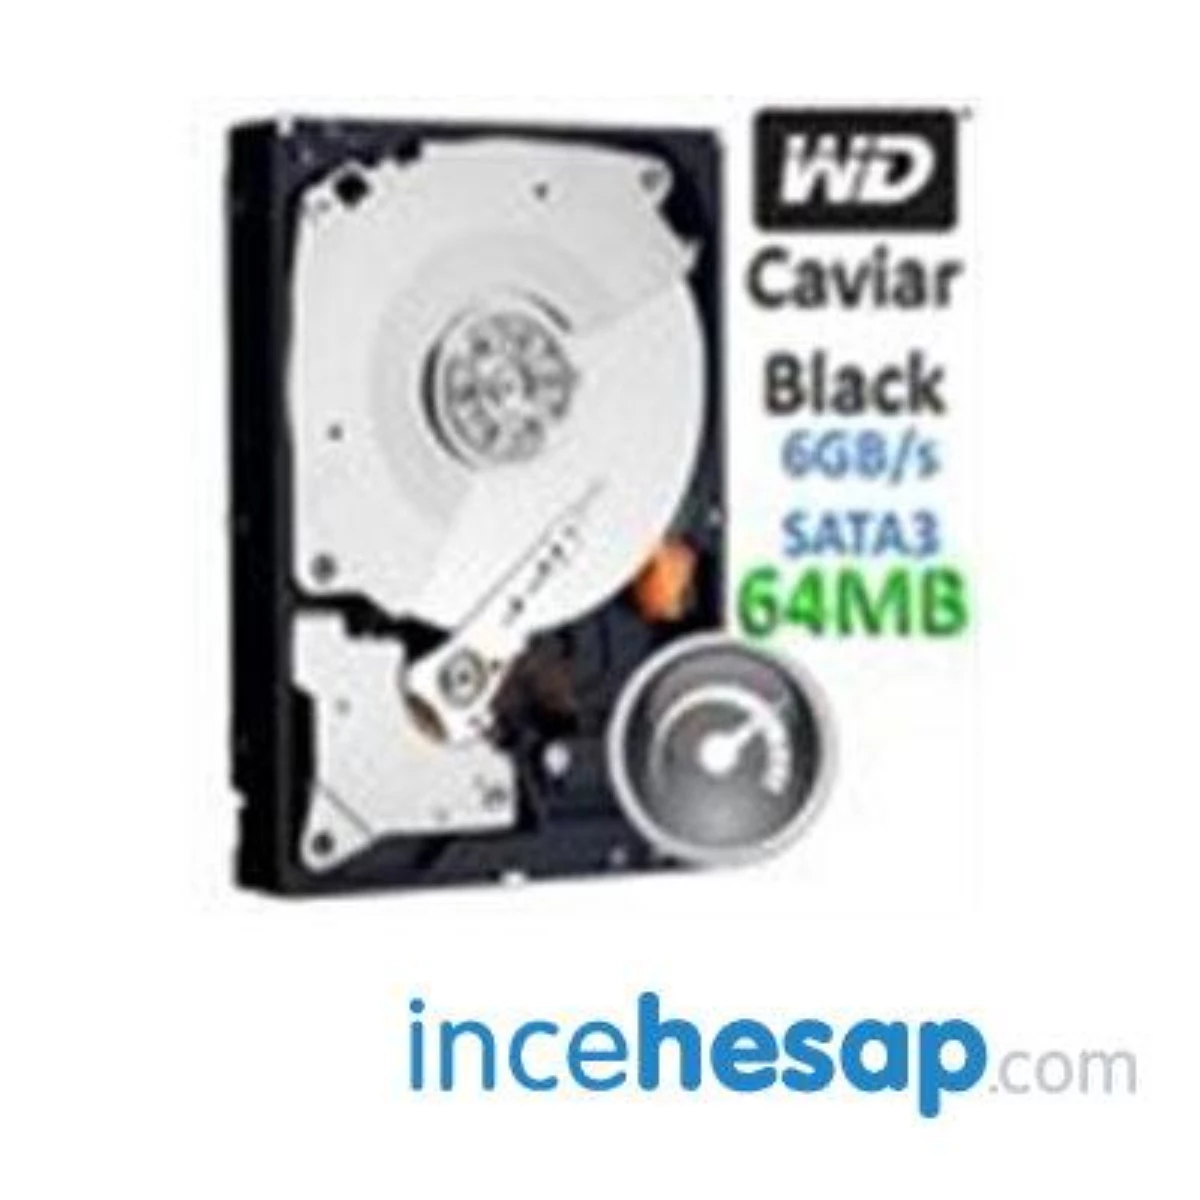 Western Digital 1 Tb Caviar Black Sata3 Hard Disk Wd1002faex